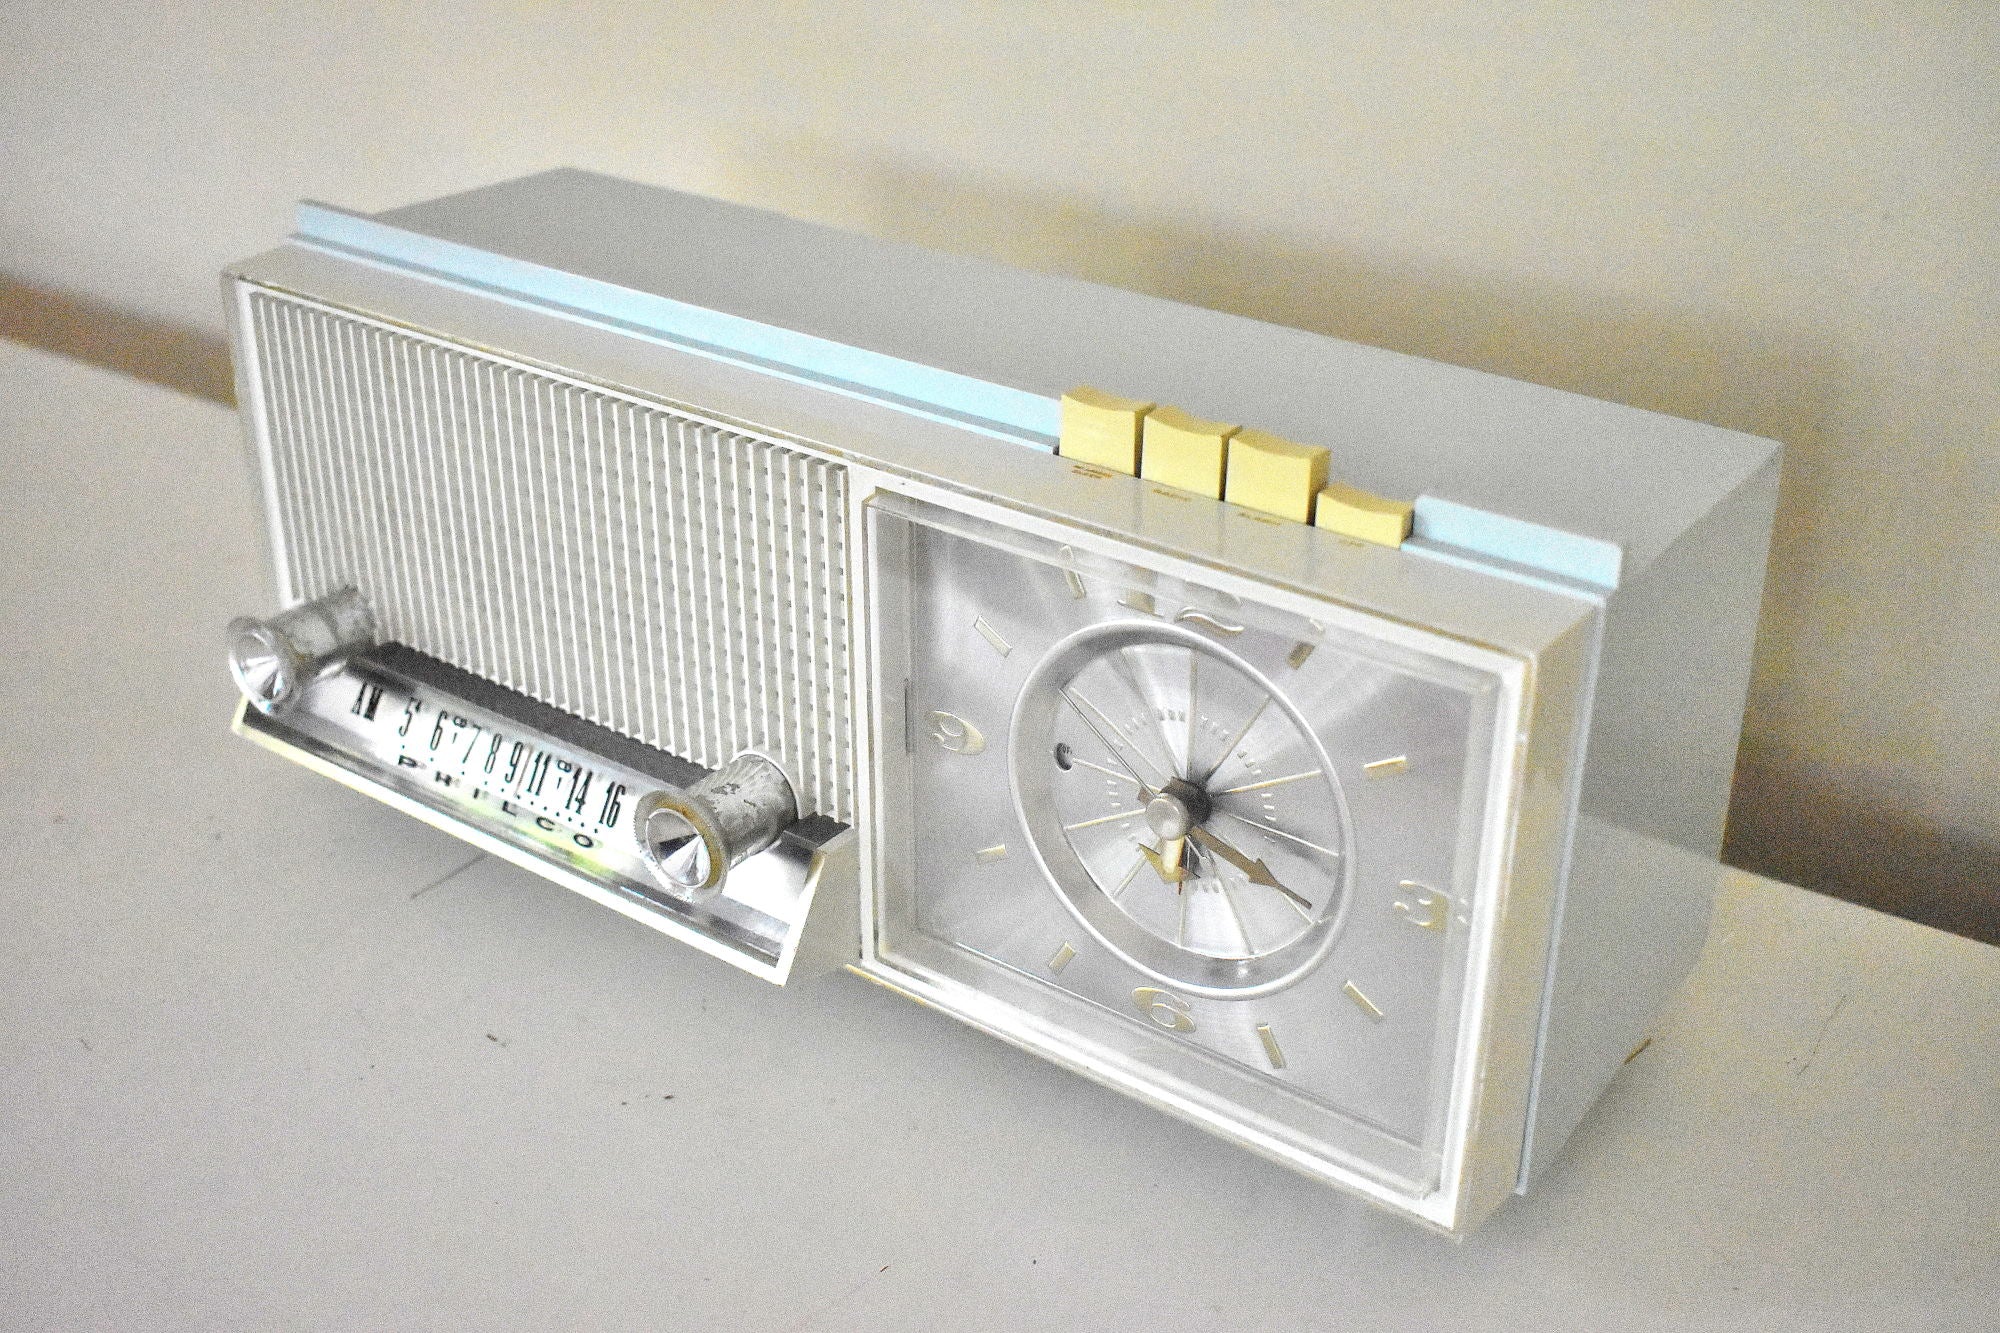 Diamond Blue 1964 Philco Model M-716-124 AM Vacuum Tube Radio Sounds and Looks Lovely!